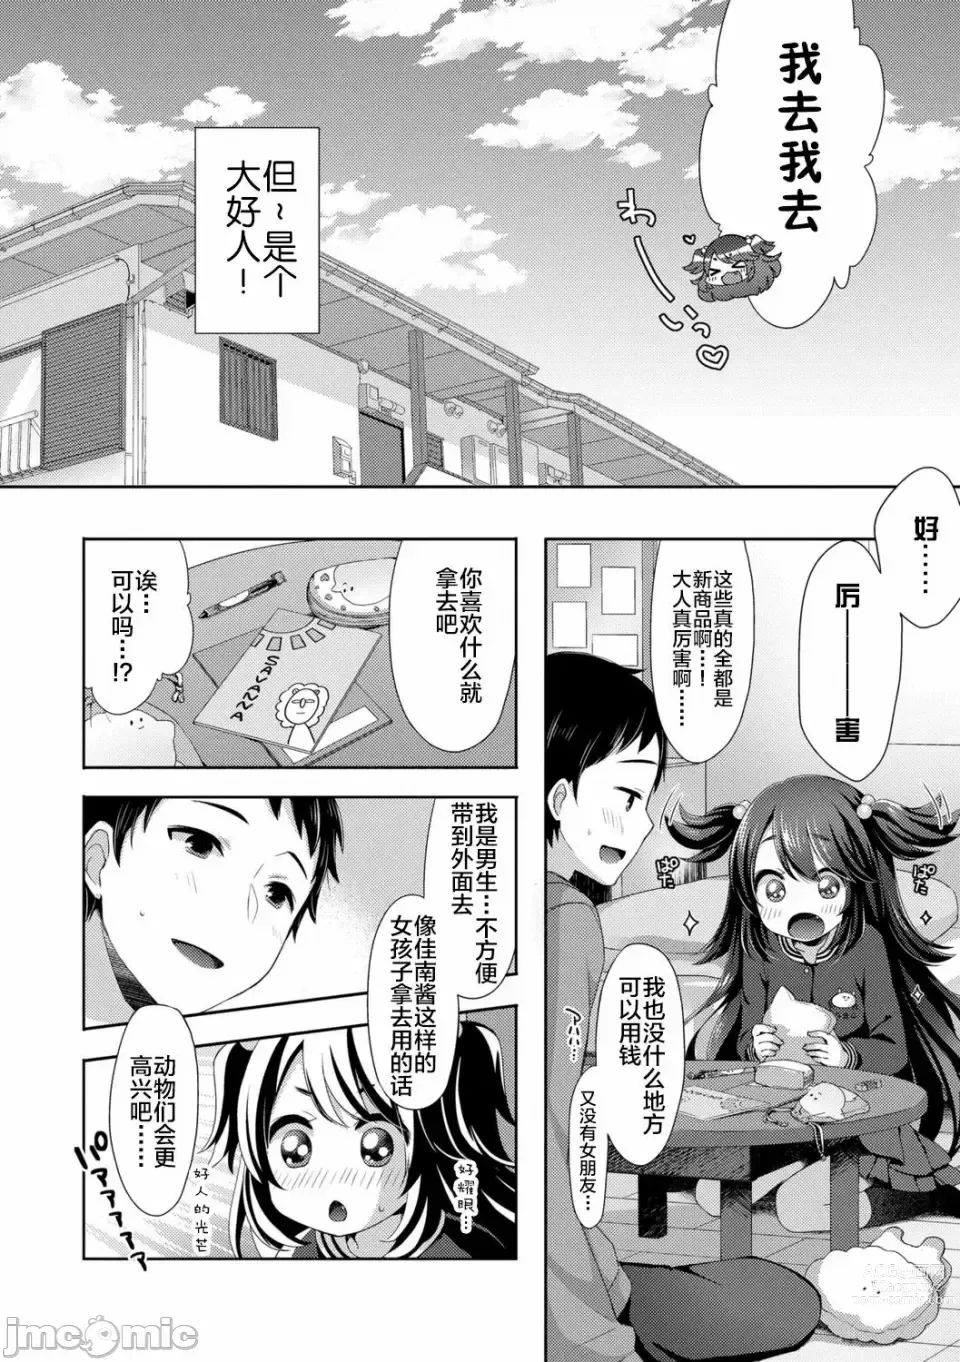 Page 7 of manga 喵喵驚喜!